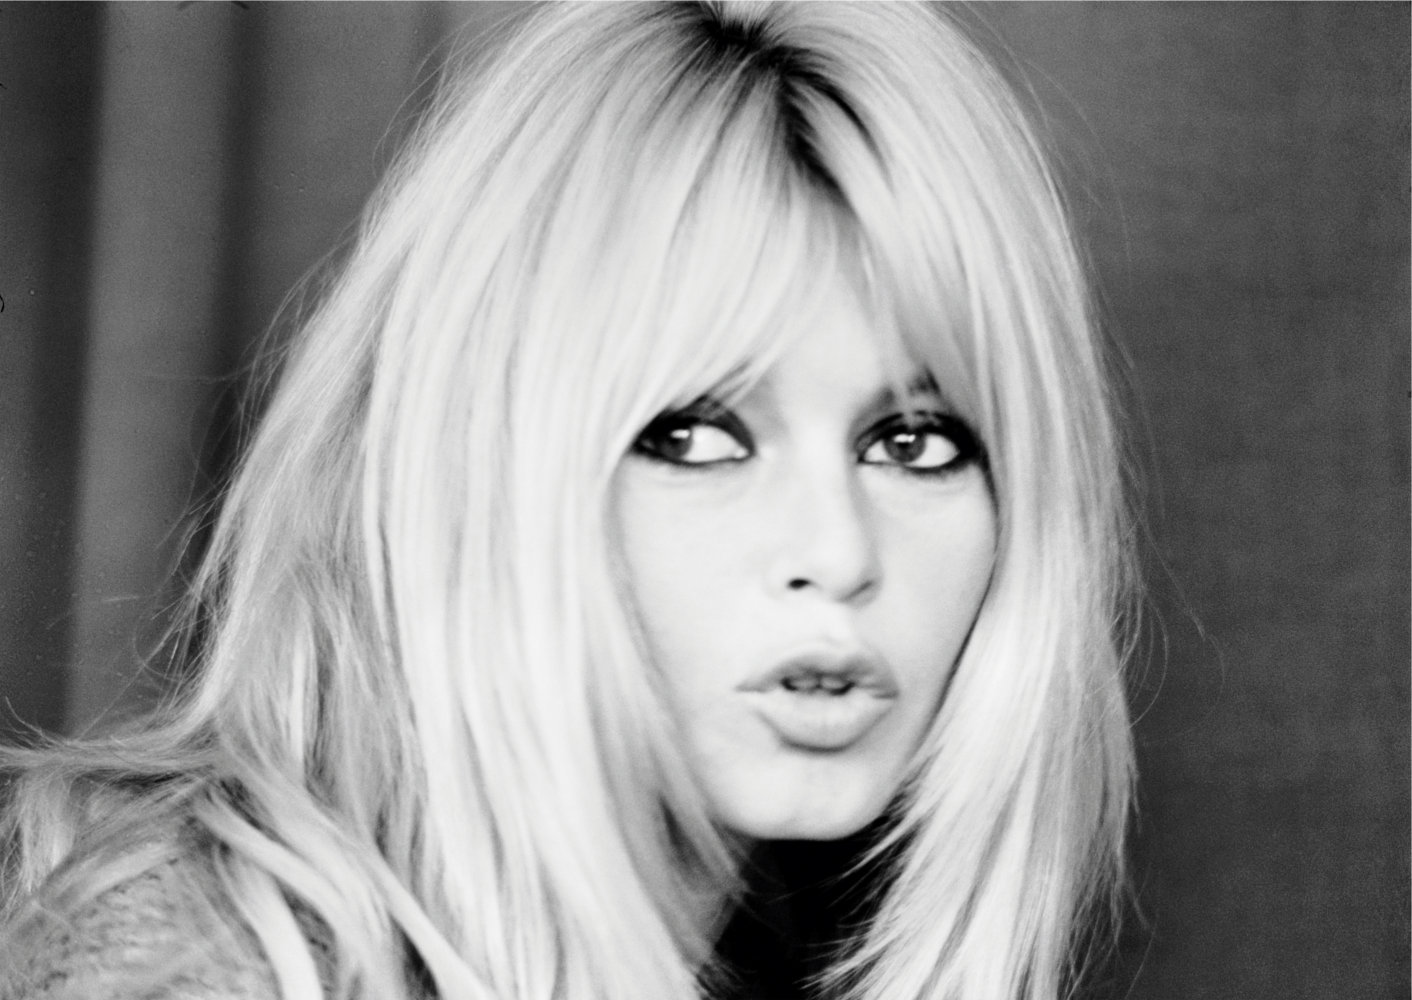 Brigitte Bardot biasima #metoo: attrici 'civette'